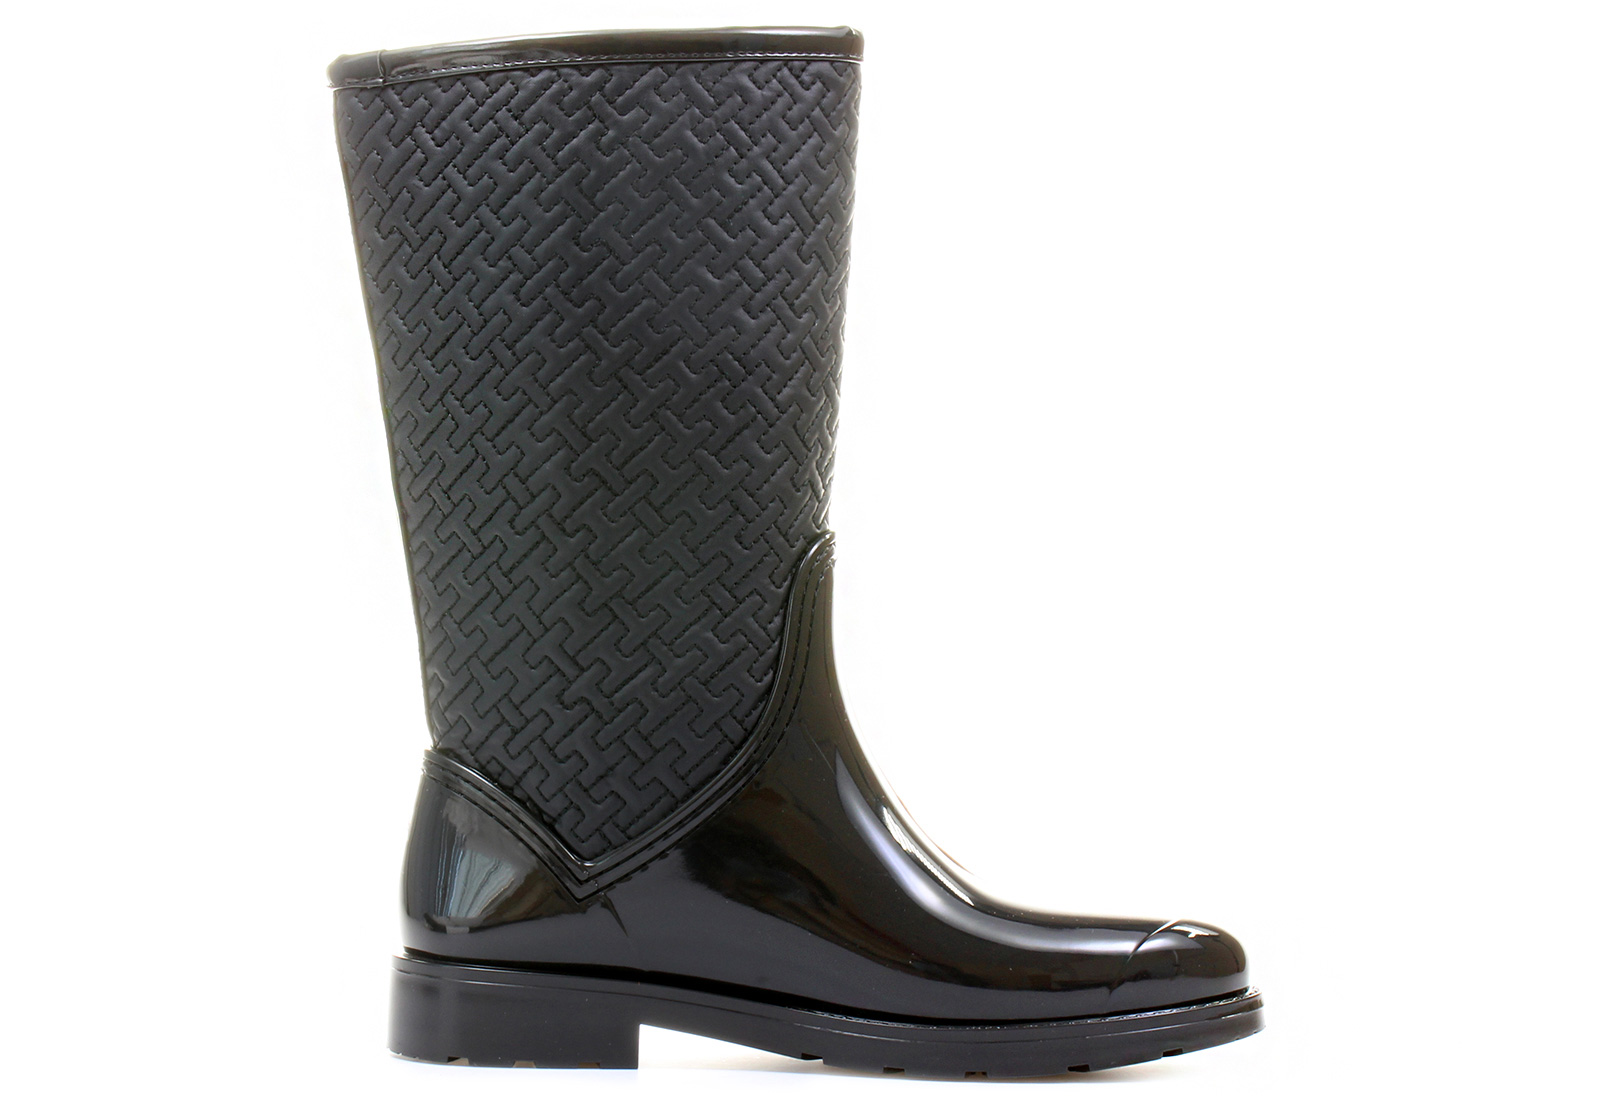 Tommy Hilfiger Boots - Oxford 15 D - 13f-6053-990 - Online shop for ...